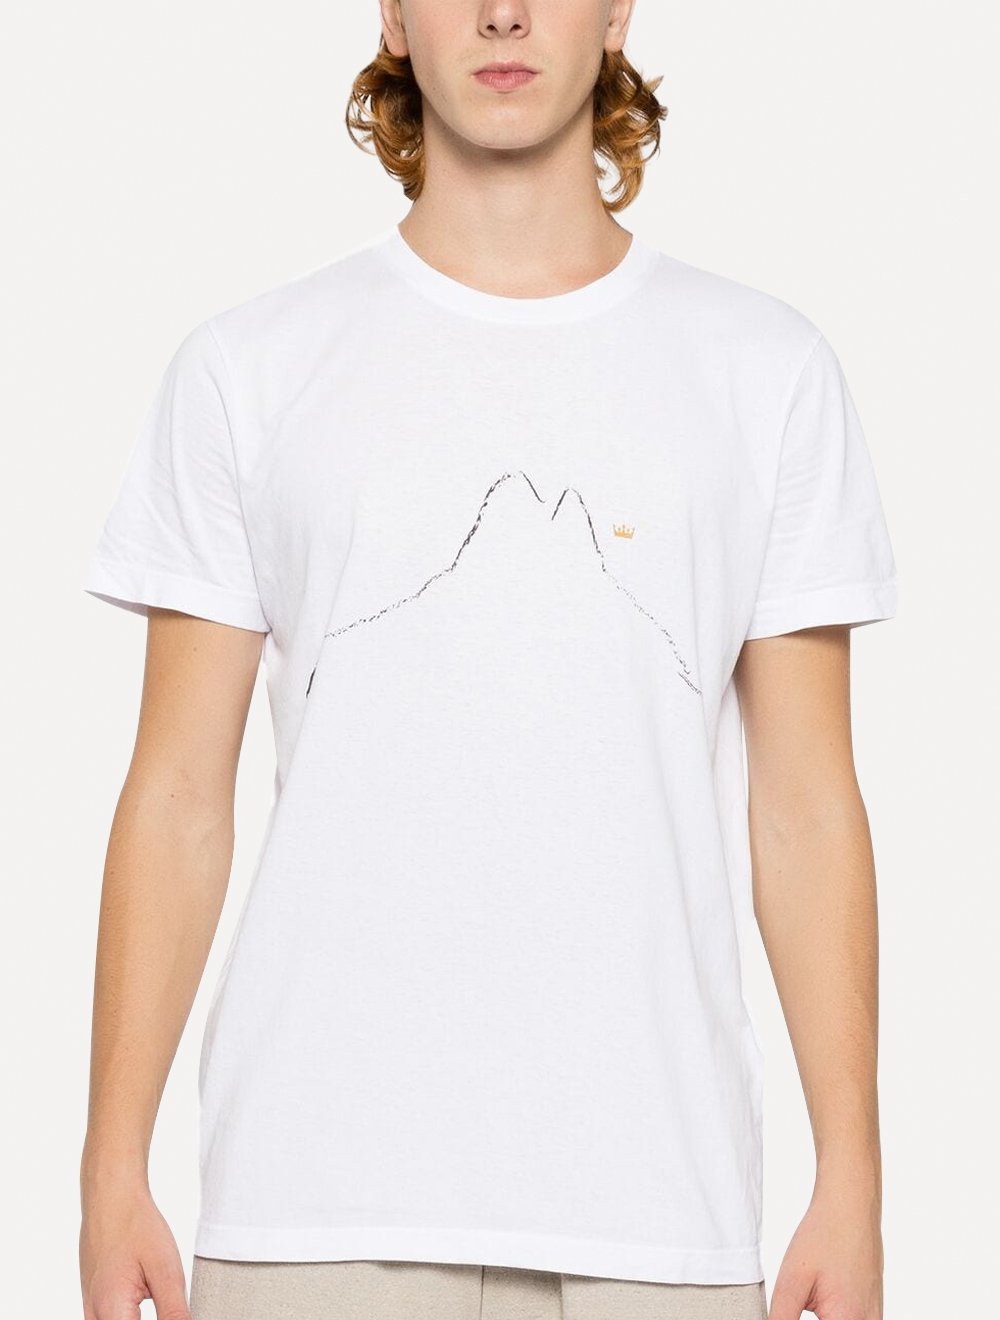 Camiseta Osklen Masculina Slim Stone Minimal Rio Coroa Branca